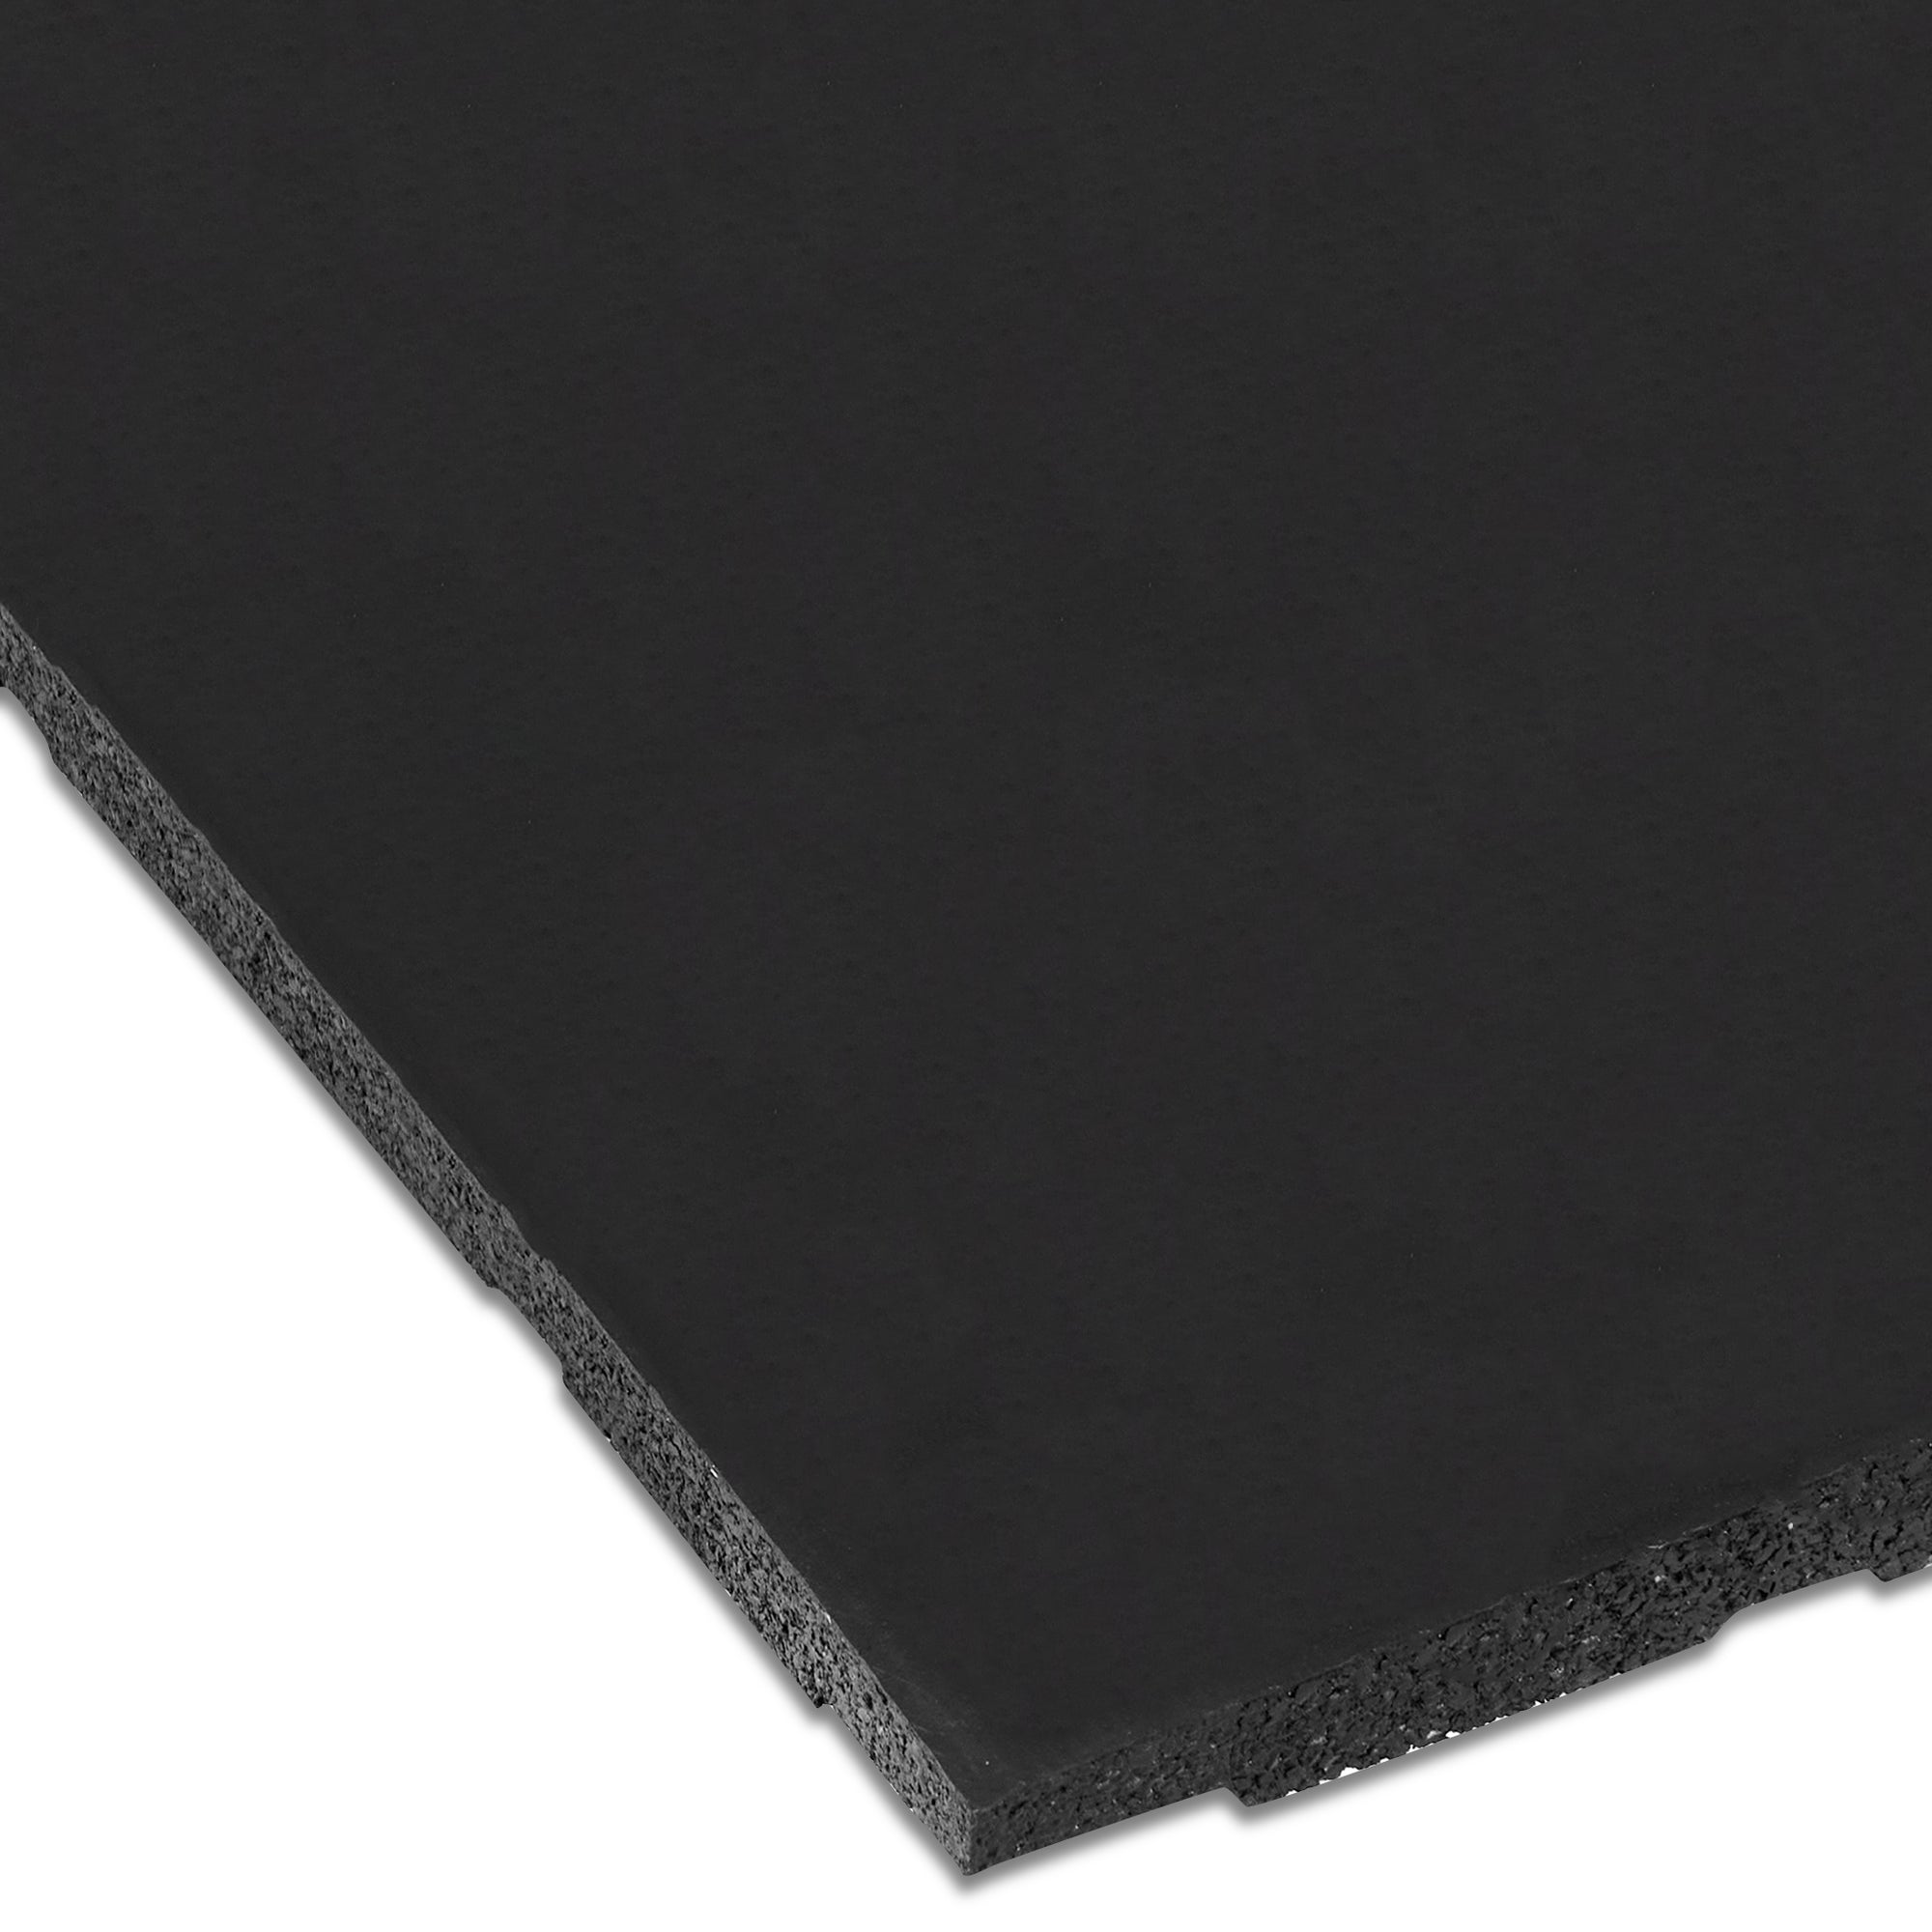 1m x 1m 20mm Black Immortal Gym Flooring Tiles